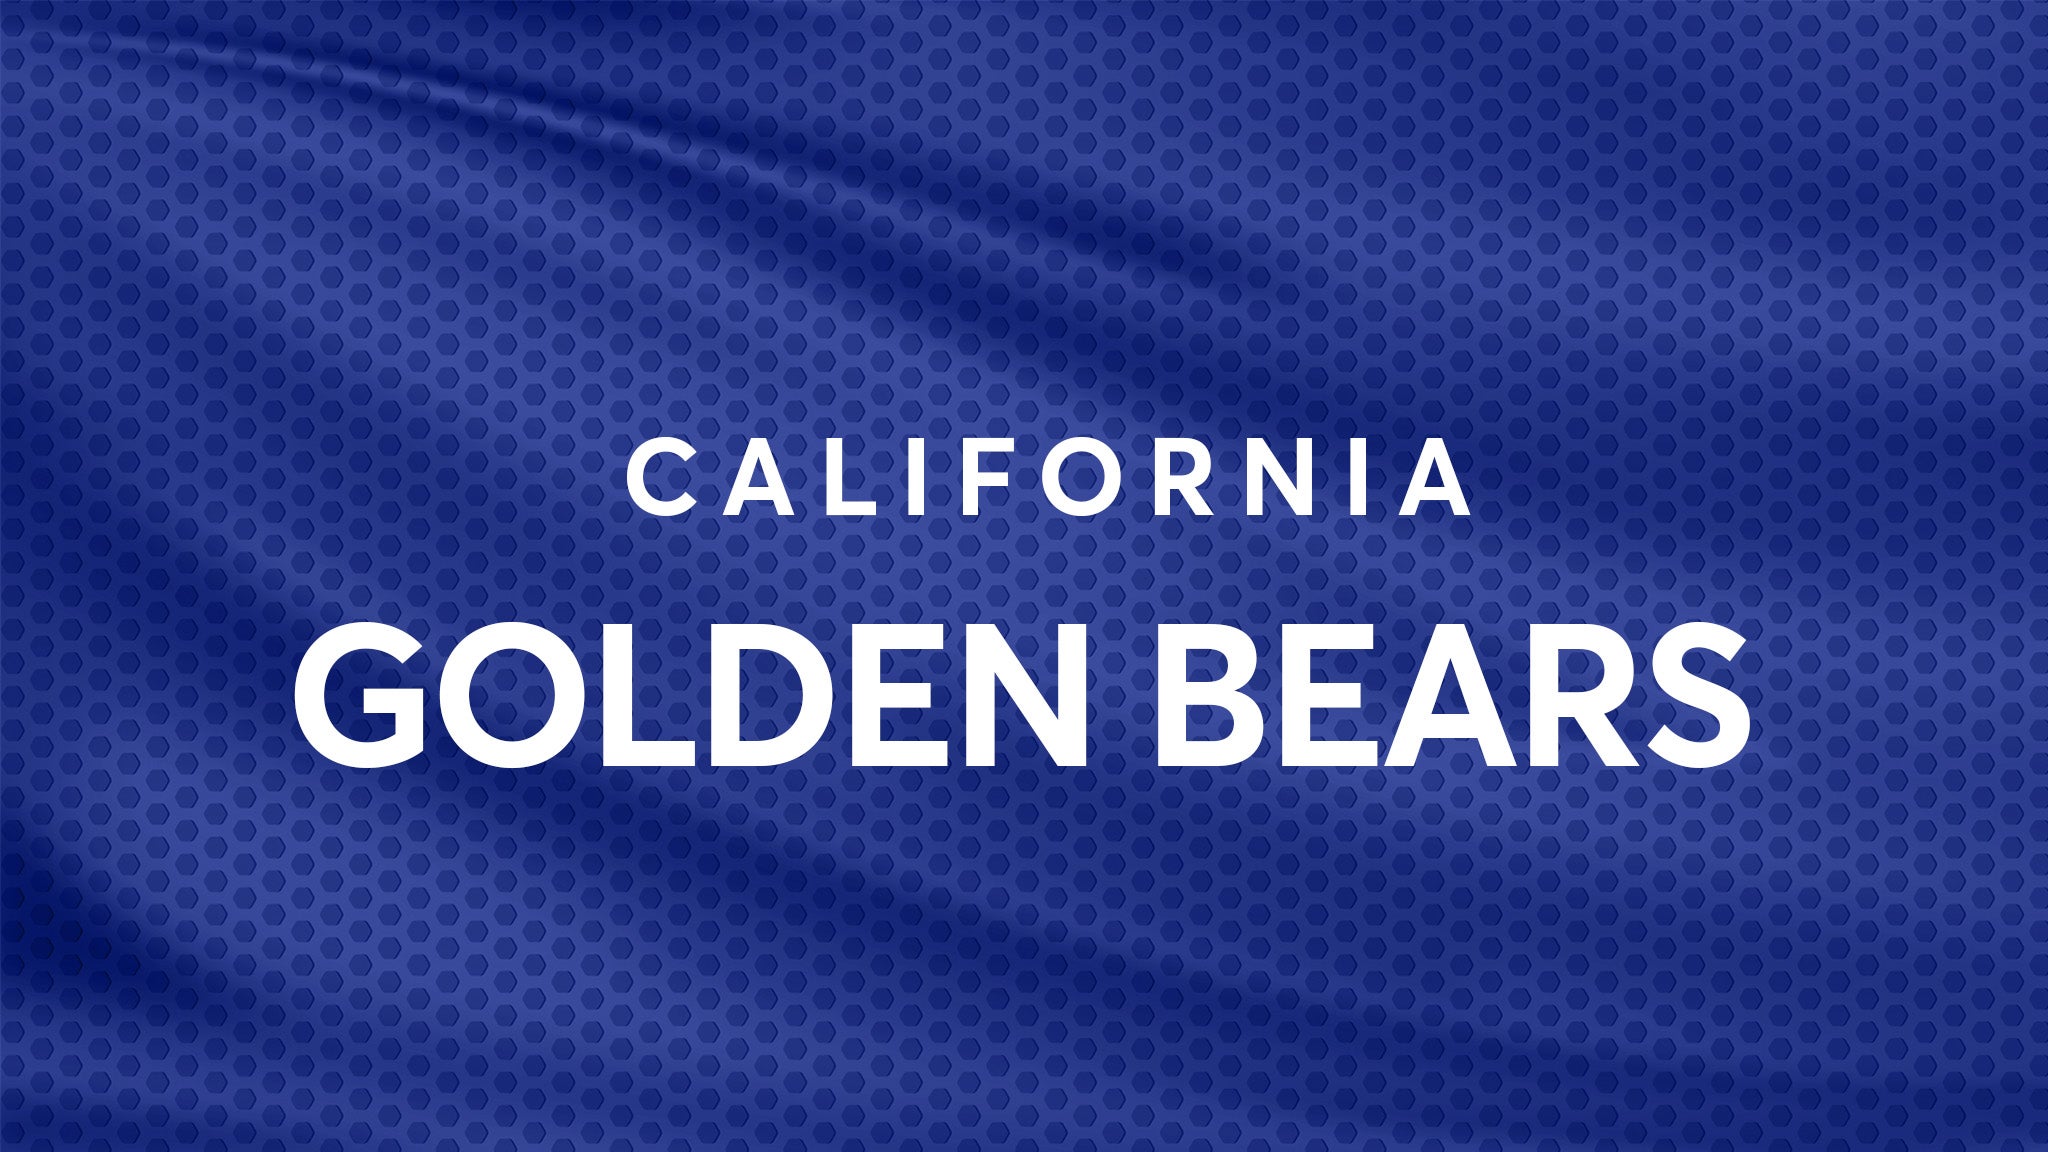 California Golden Bears Football vs. UC Davis Aggies Football hero